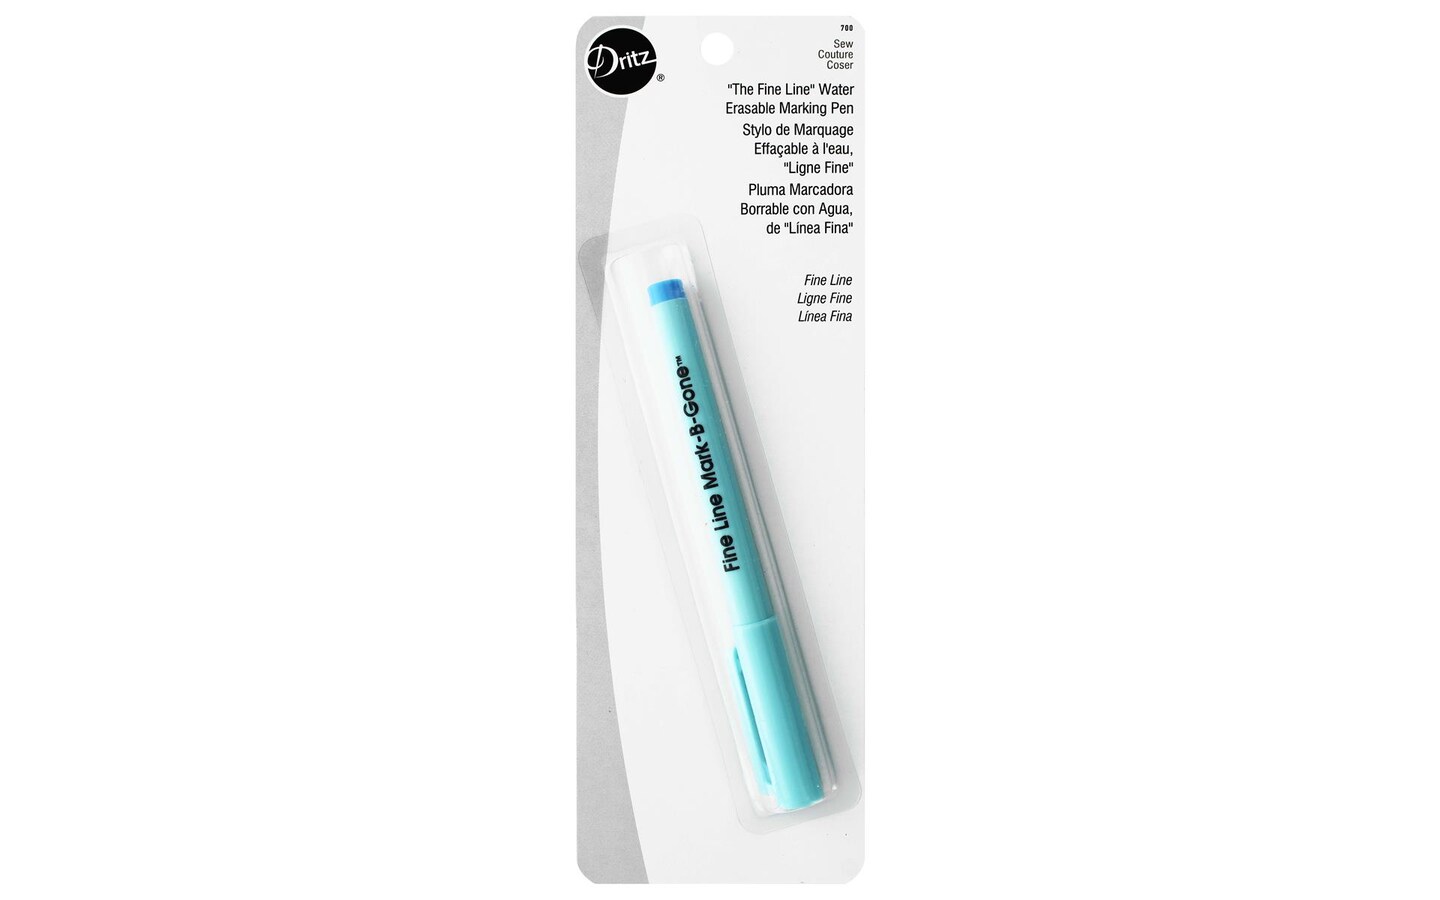 Dritz The Fine Line Marking Pen Water Erasable